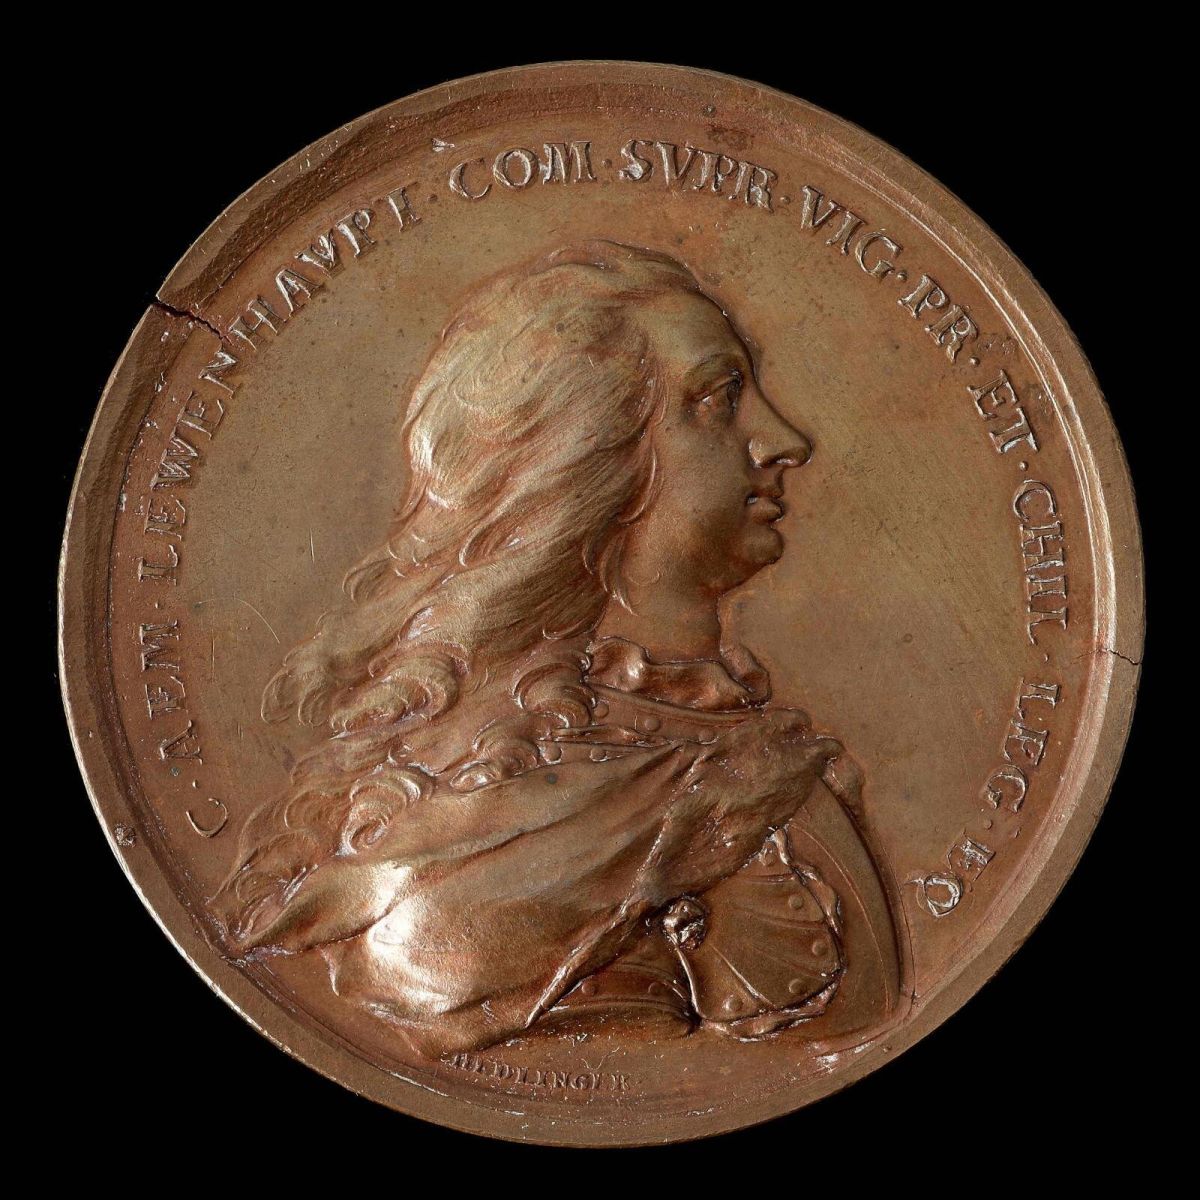 Шведский главнокомандующий Карл Эмиль Левенгаупт на медали 1734 года